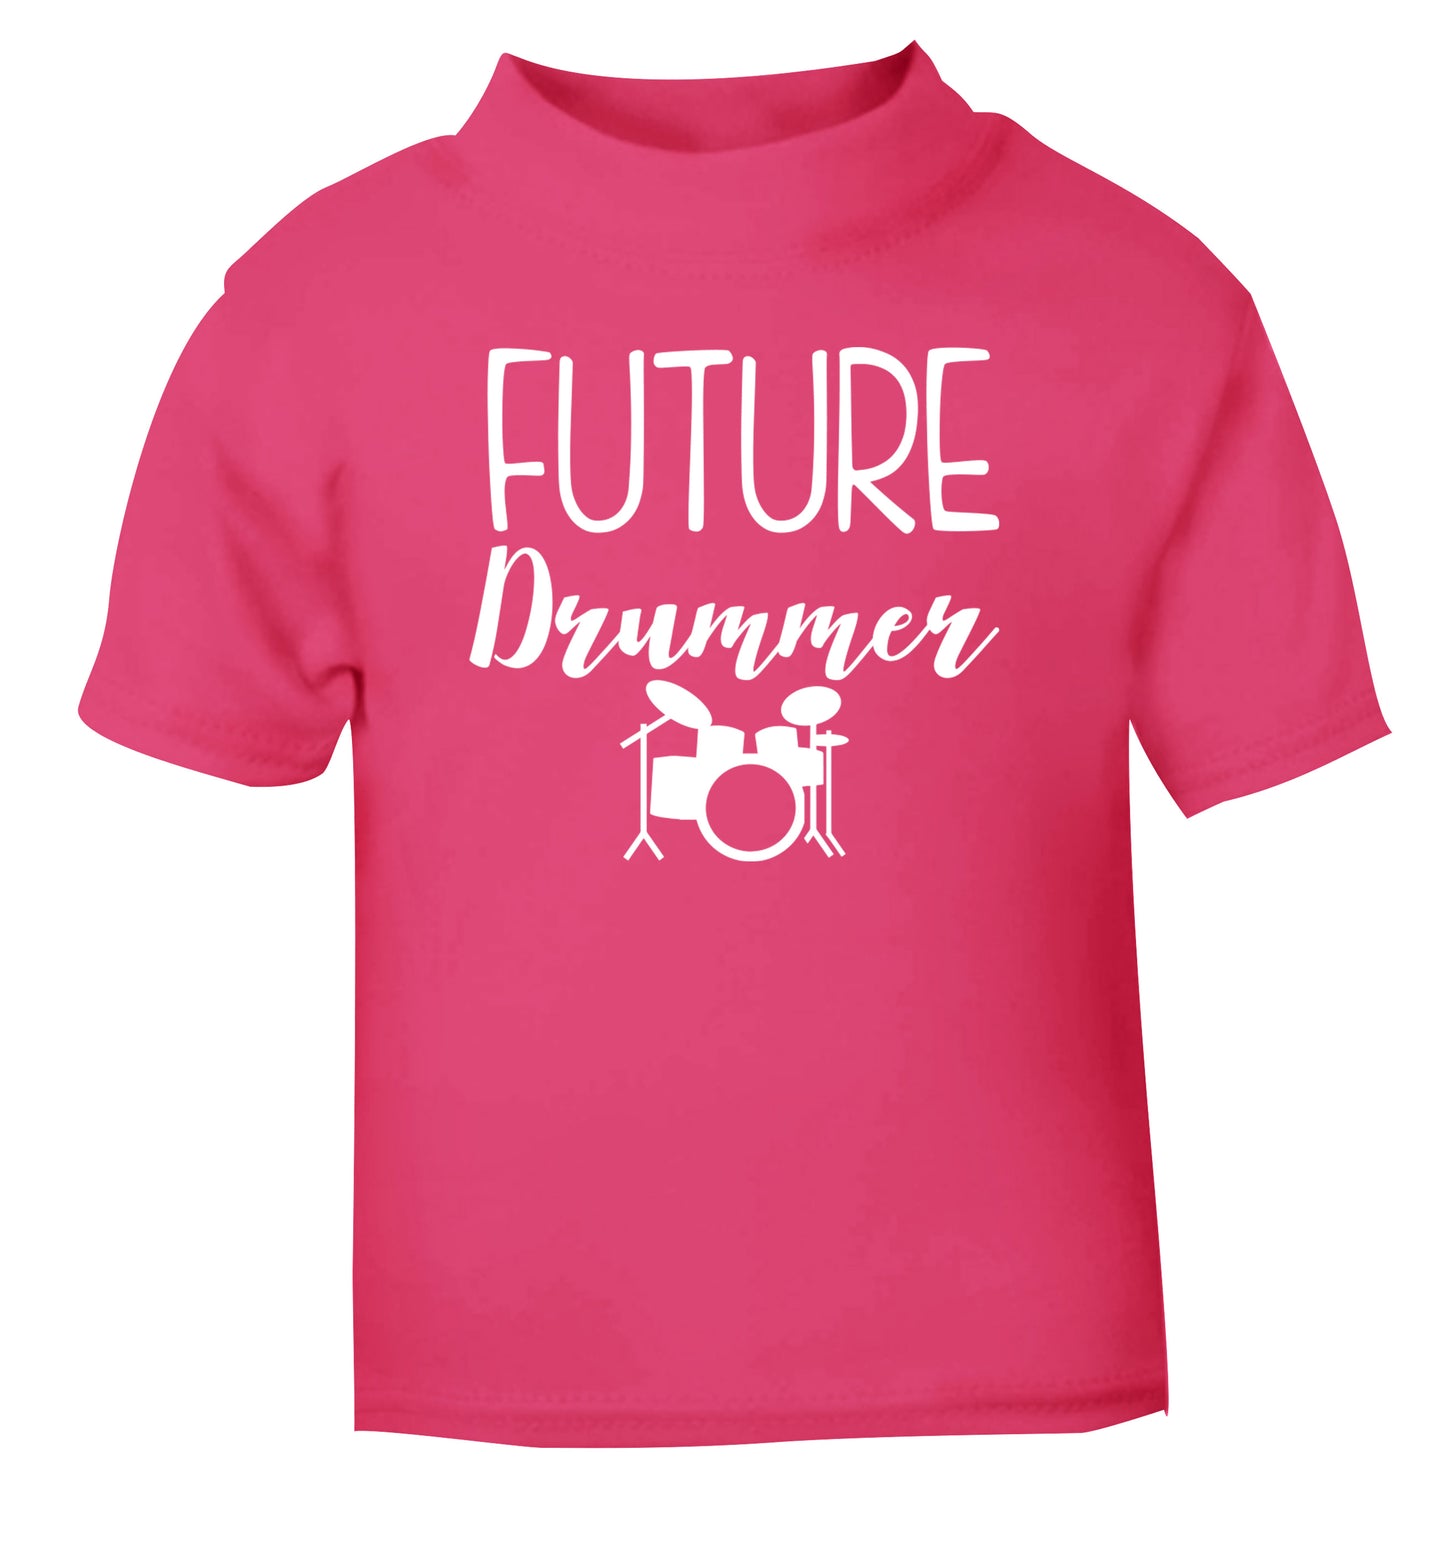 Future drummer pink Baby Toddler Tshirt 2 Years